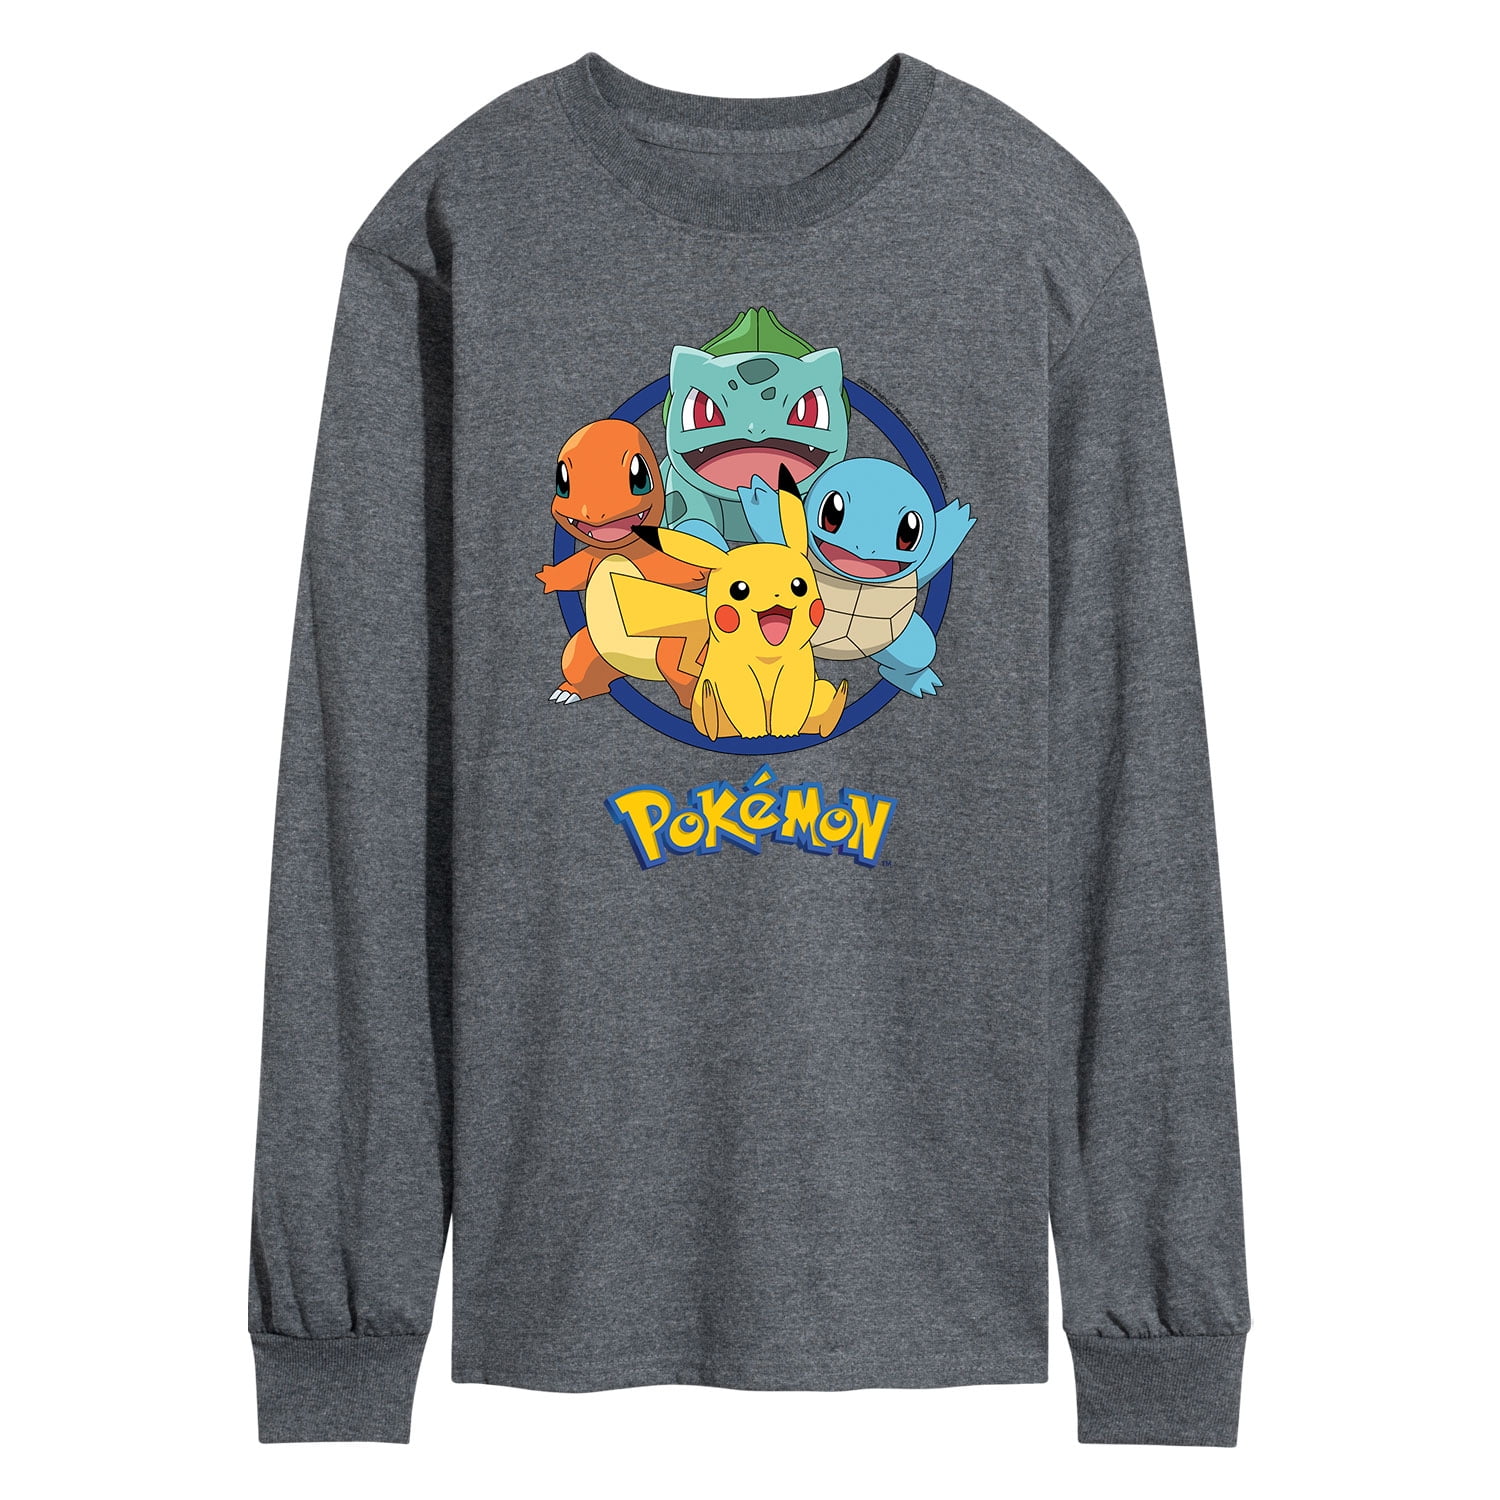 New Pokemon T Shirt Gray Long Sleeve Size Medium 